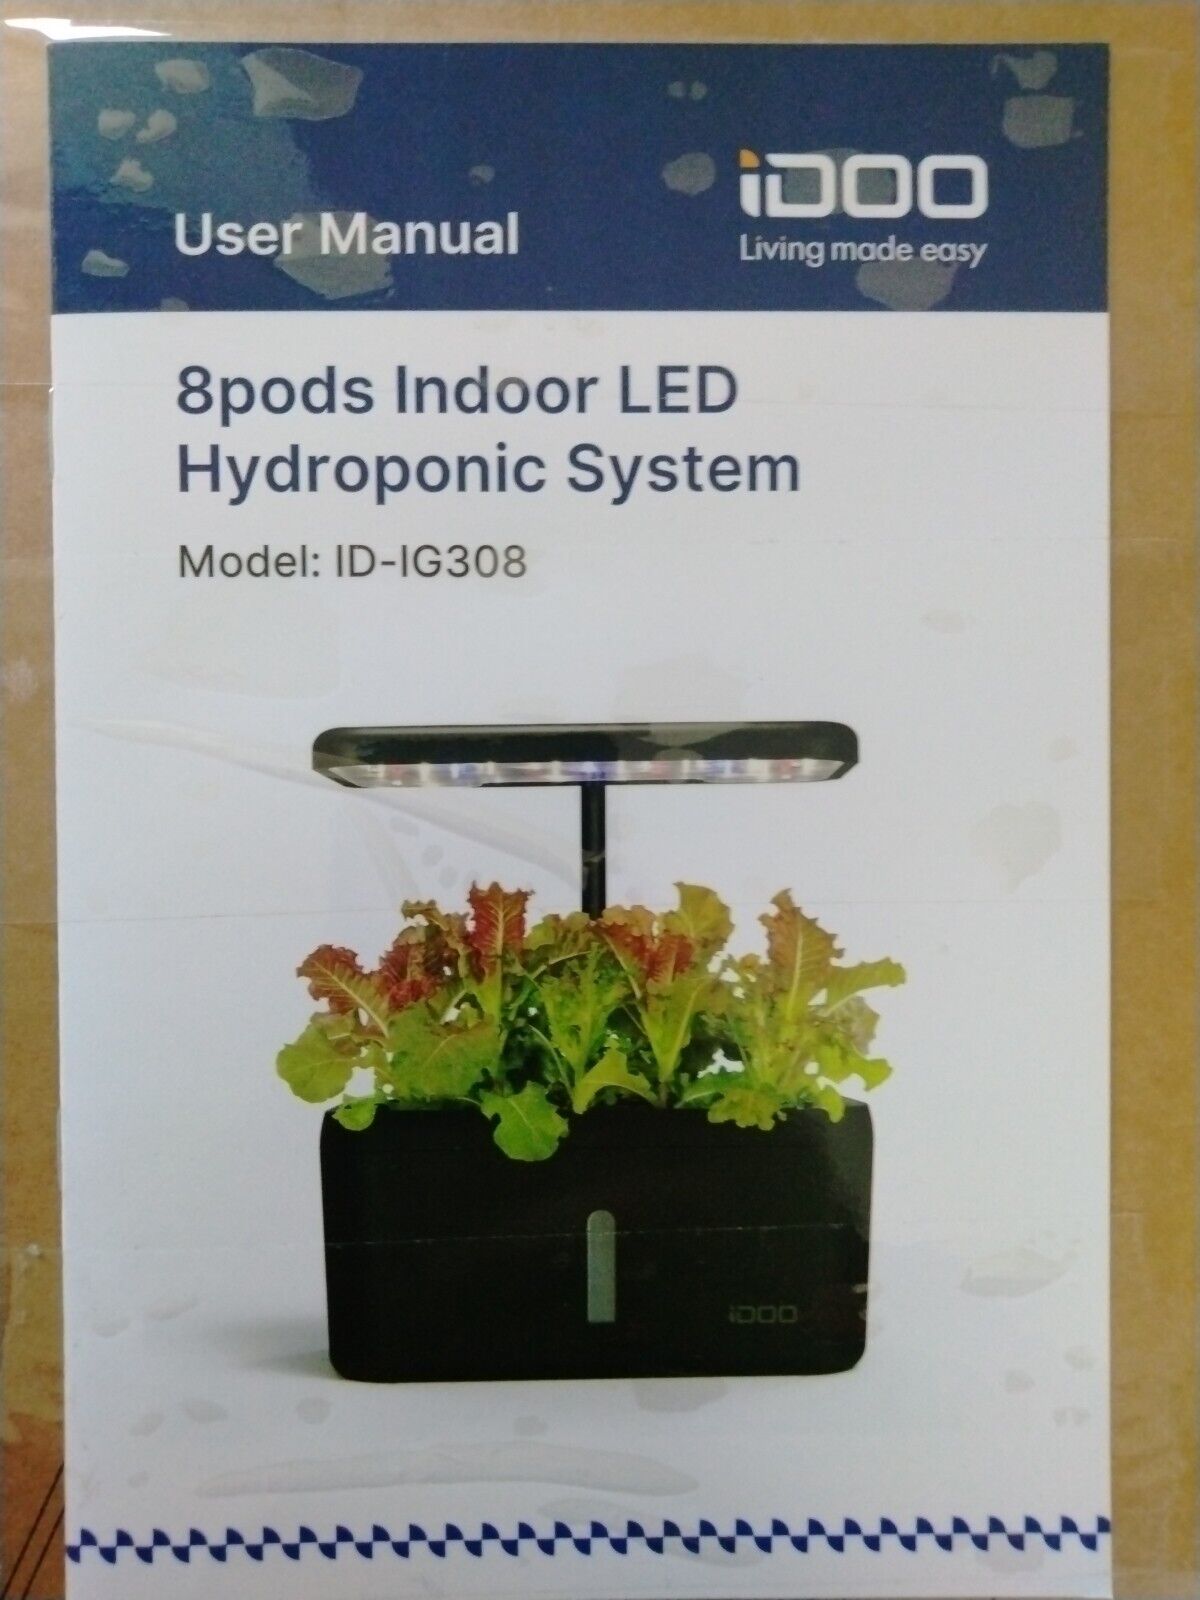 iDOO Indoor Hydroponic System LED Lighting Model ID - IG 308